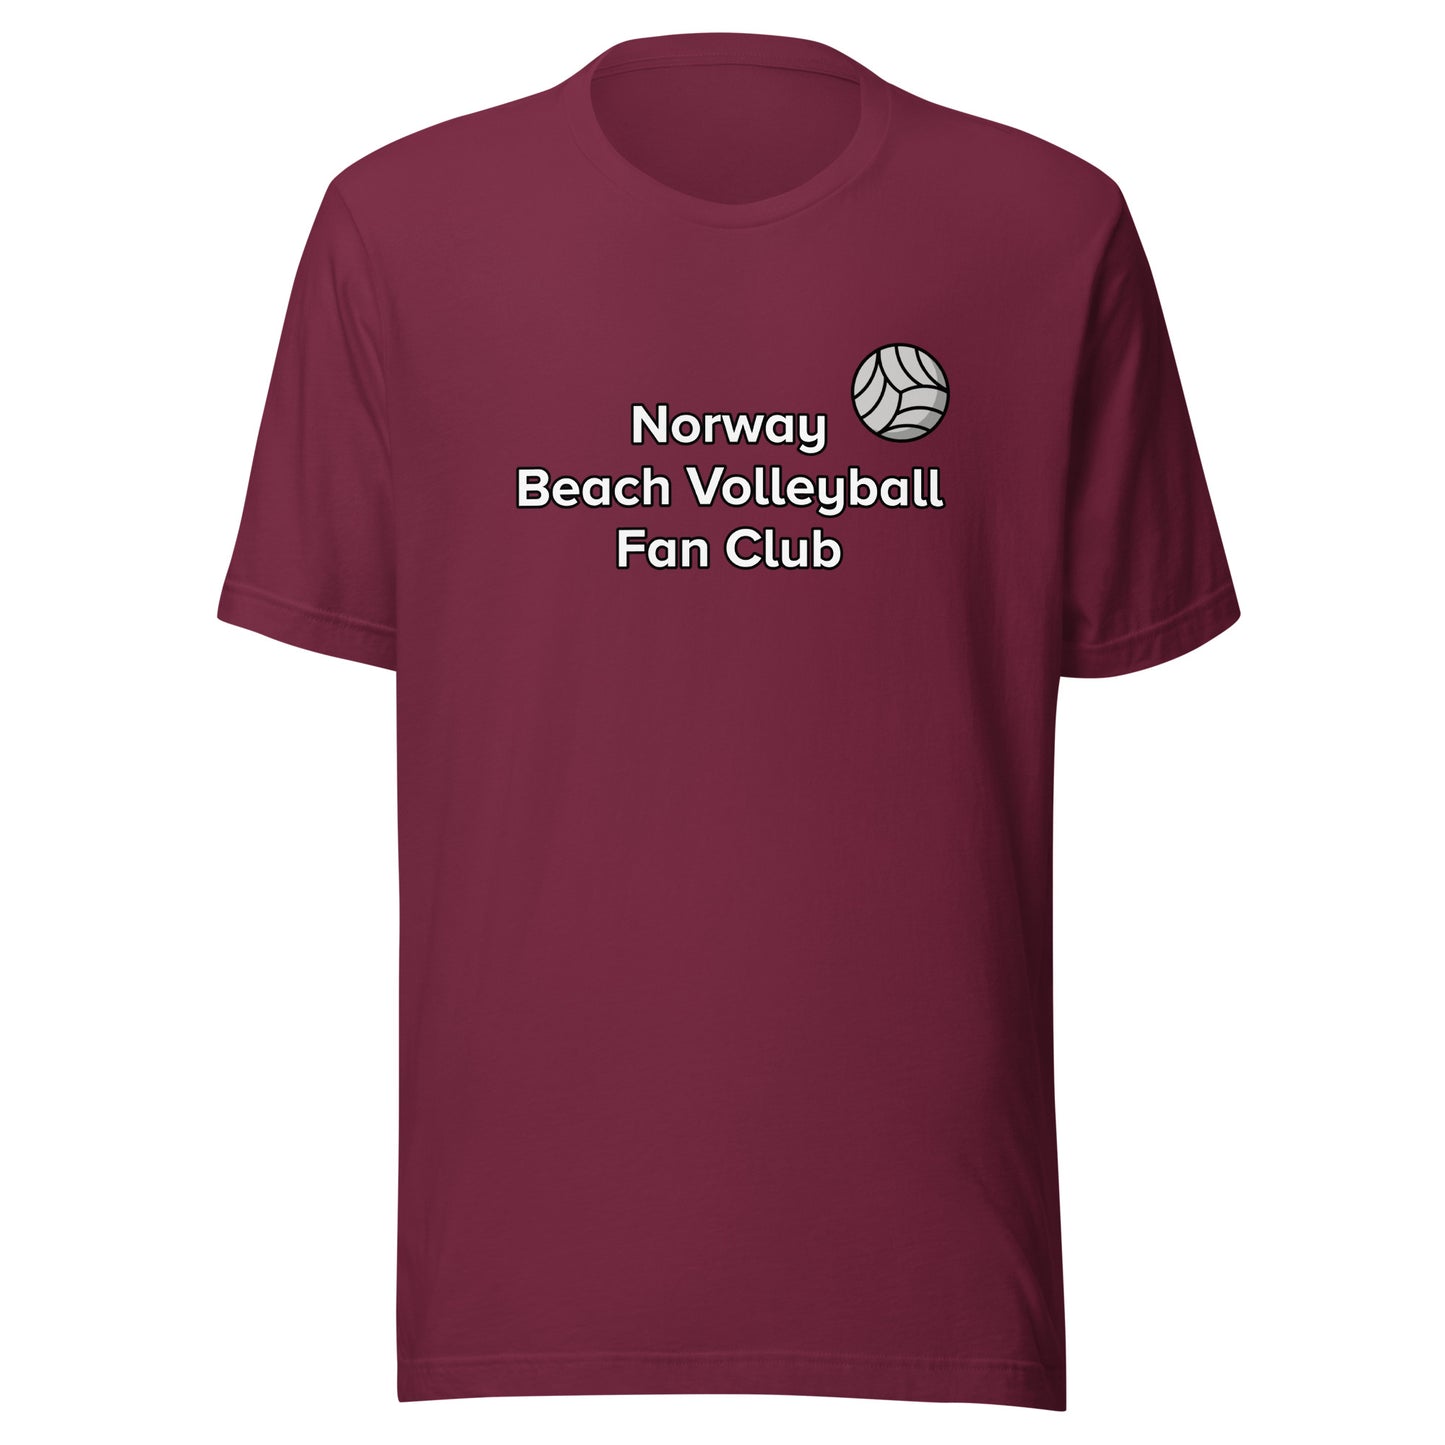 'Norway Beach Volleyball Fan Club' T-shirt